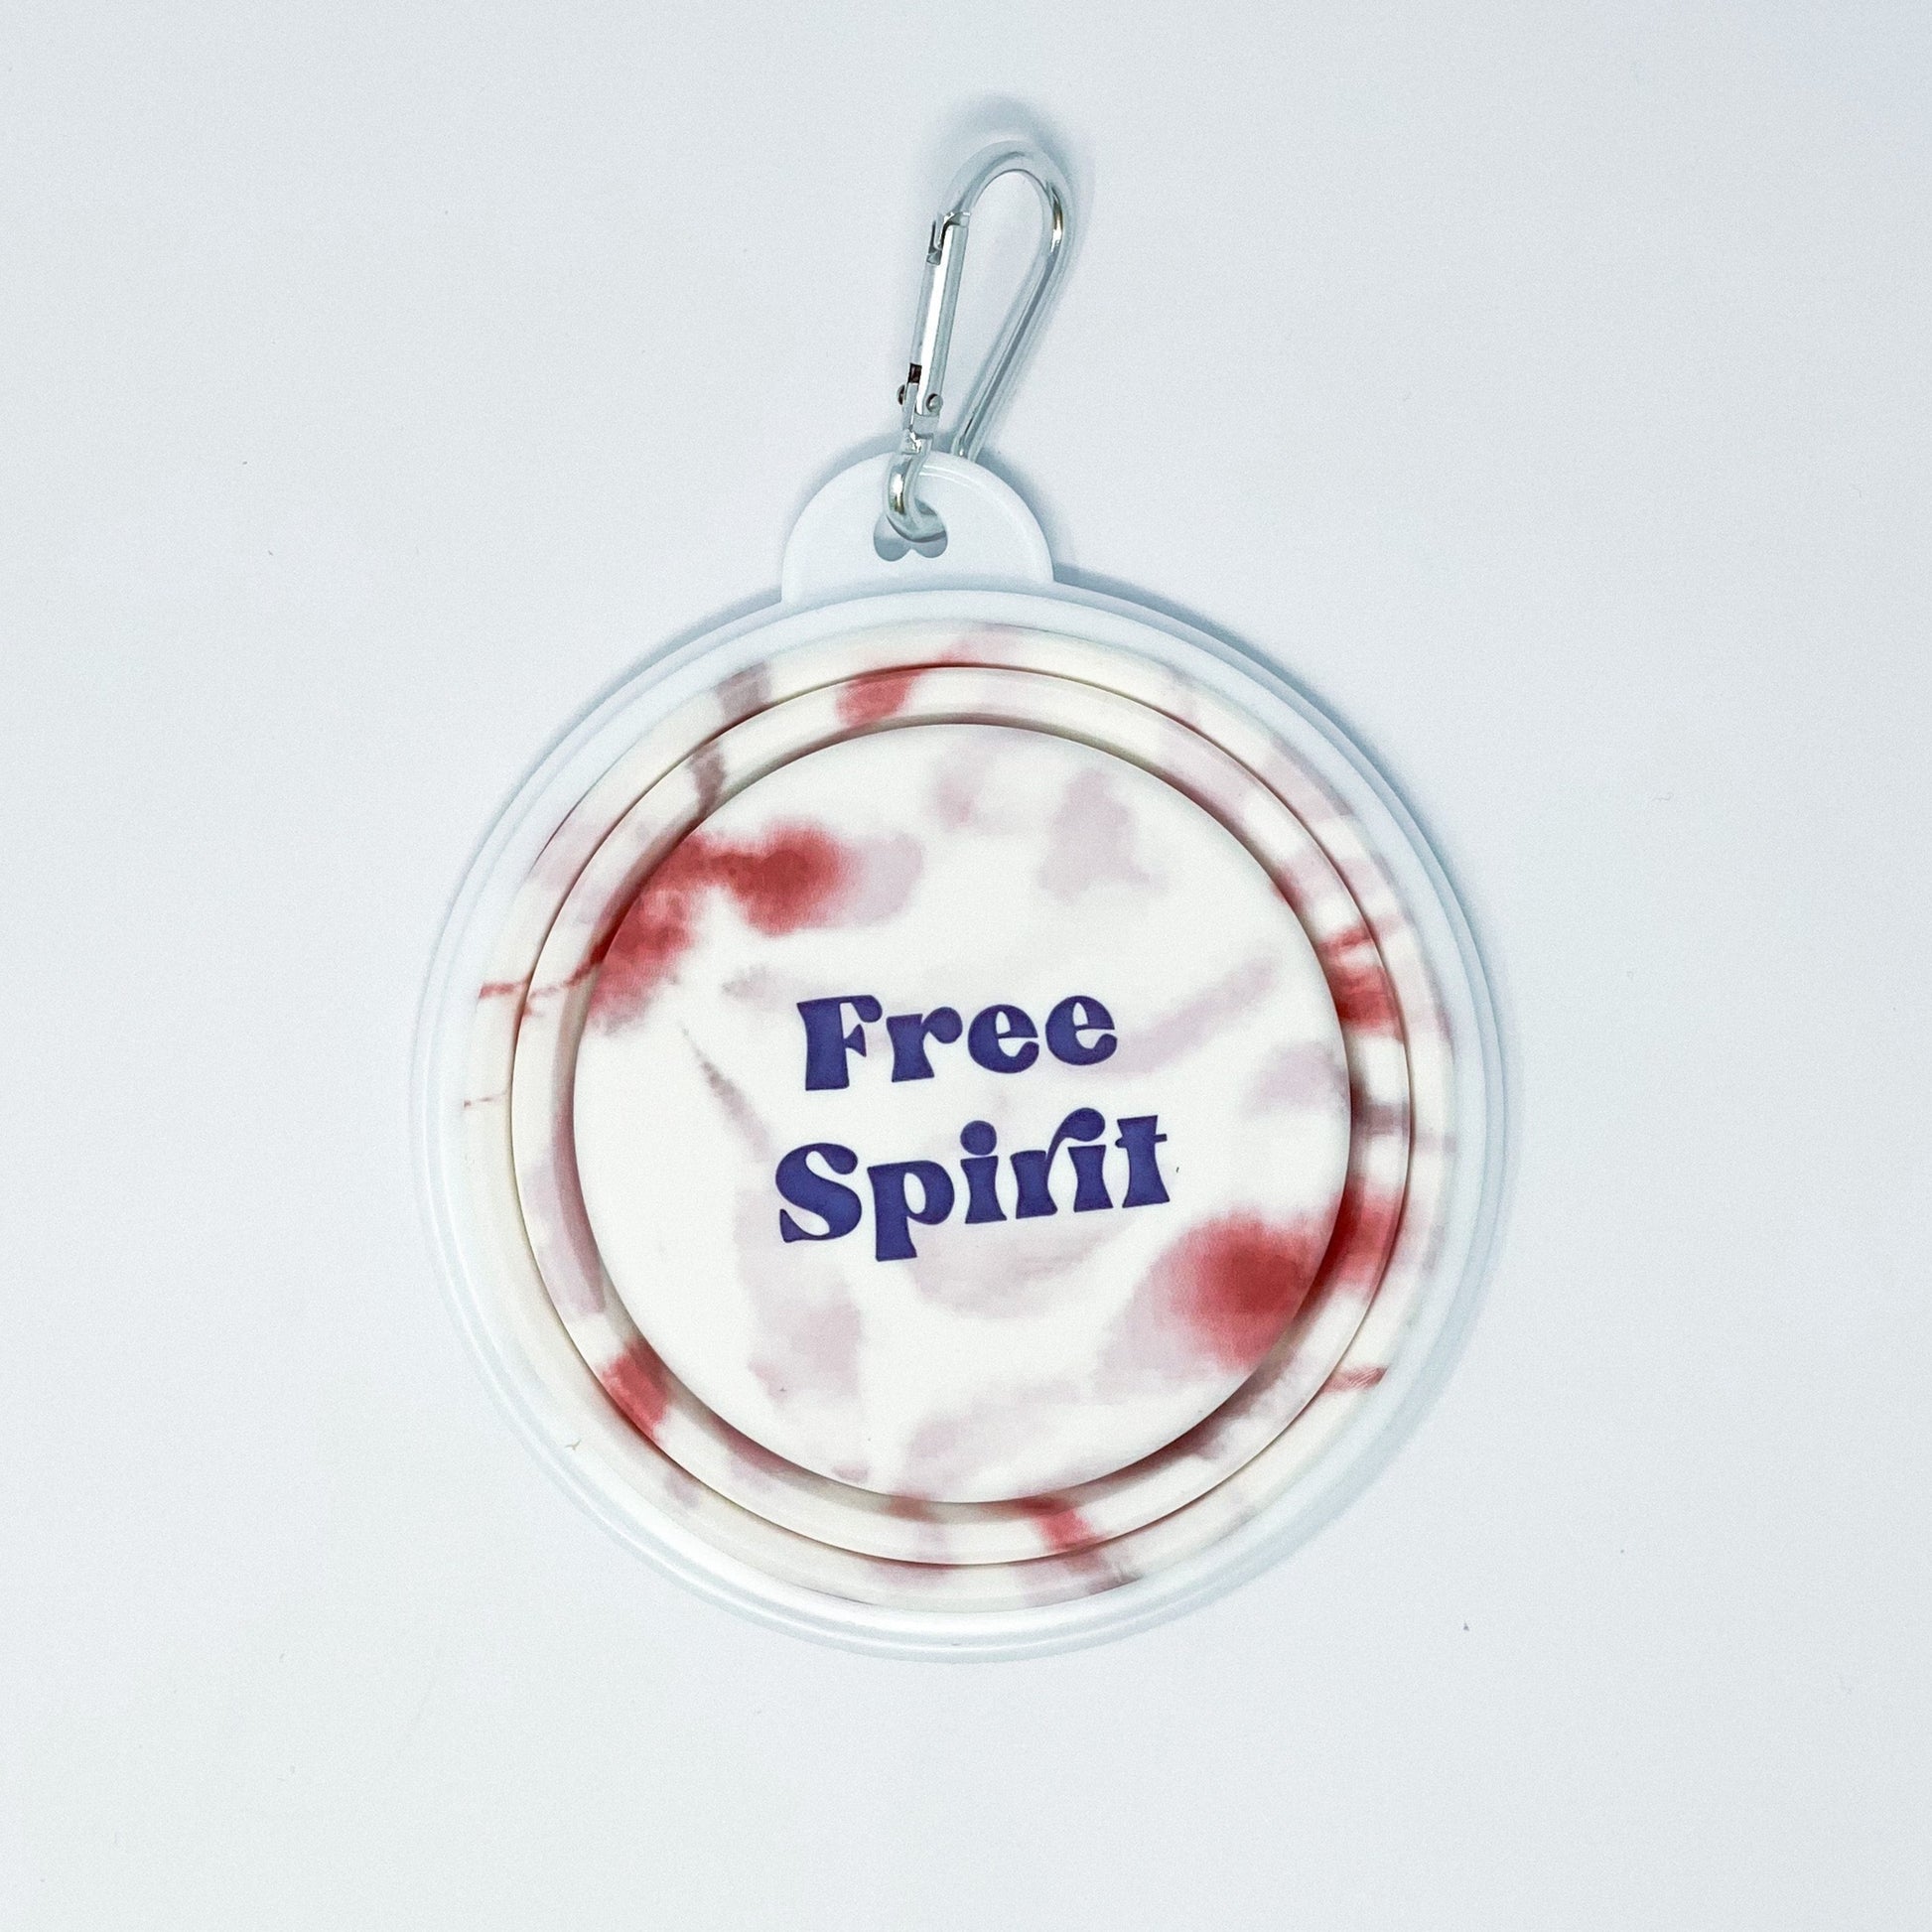 Free Spirit tie dye collapsible silicone dog travel bowl